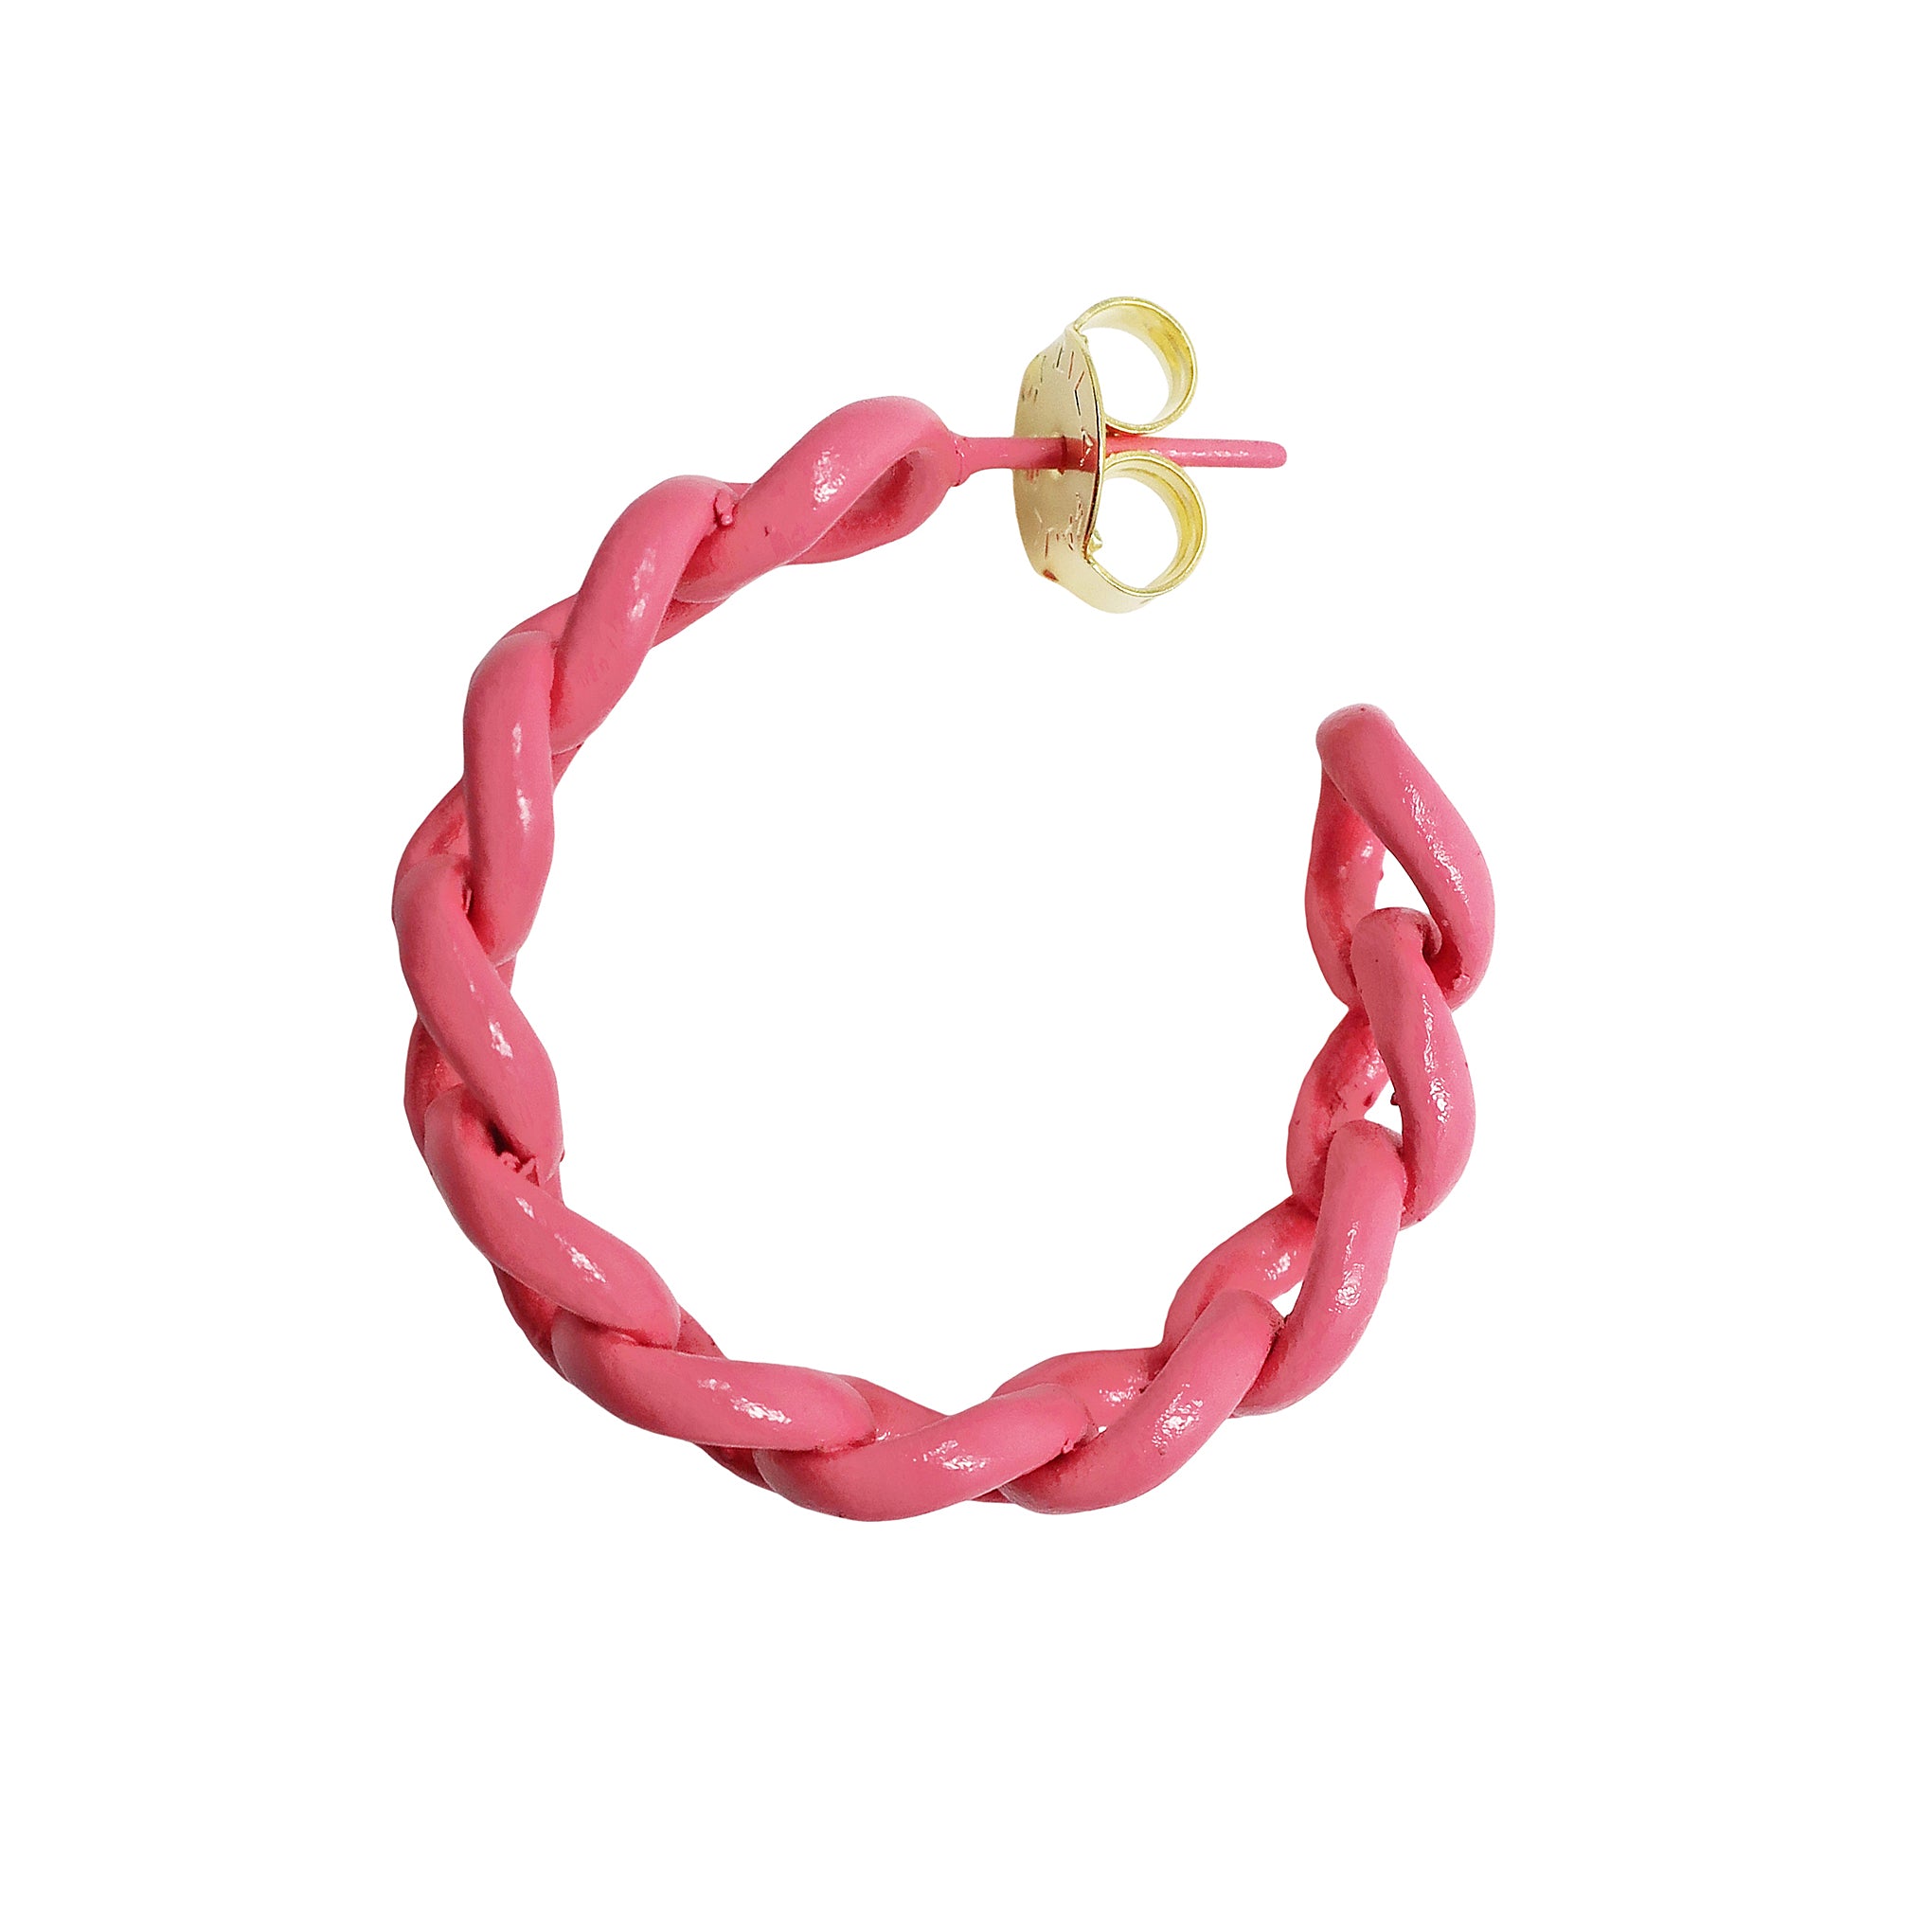 Sheila Fajl Petite Painted Chain Hoop Earrings in Pink